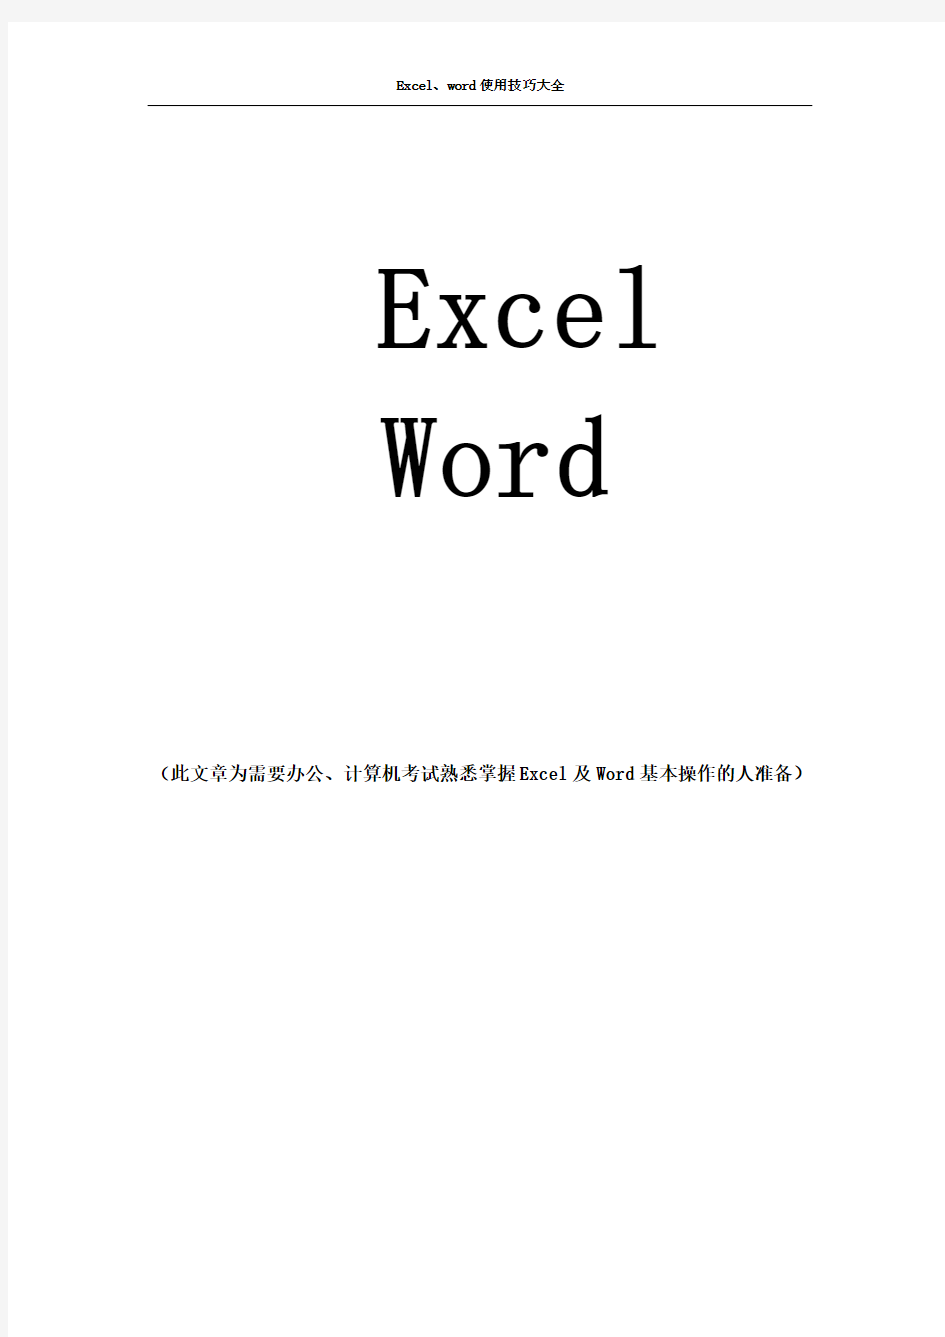 Excel与word基本操作与使用技巧大全